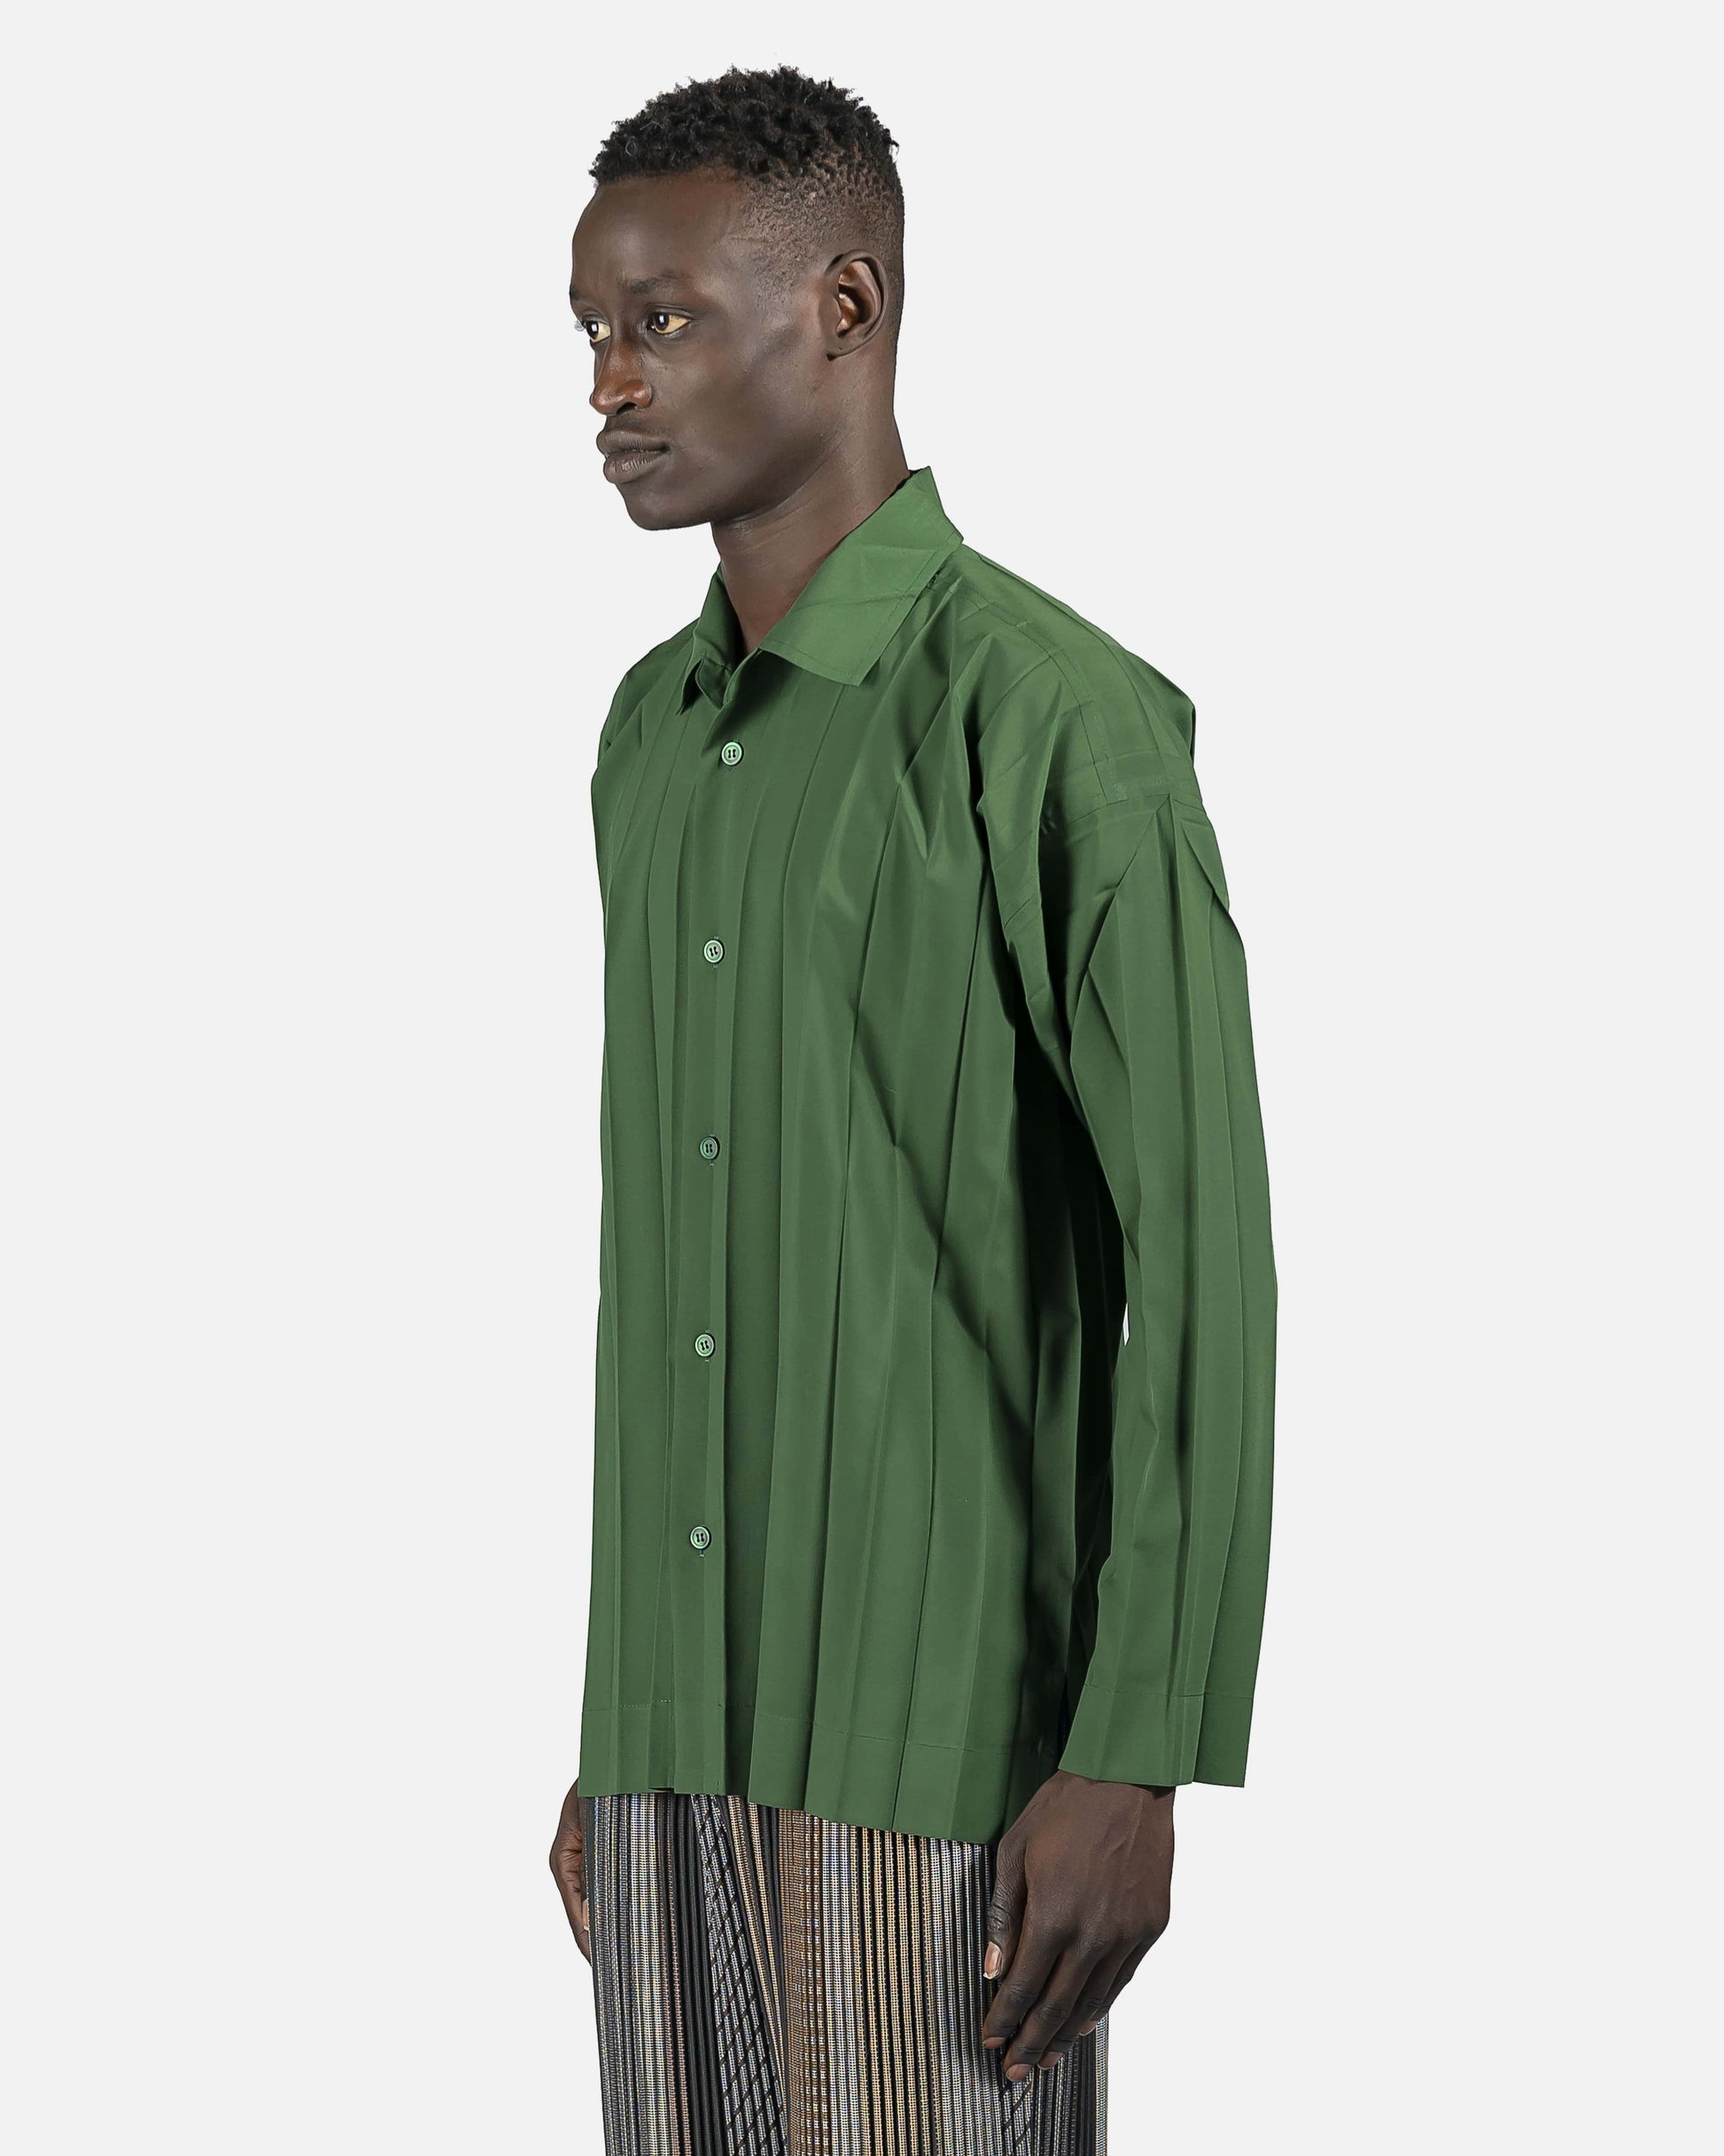 Homme Plissé Issey Miyake Men's Shirts Edge Shirt in Green